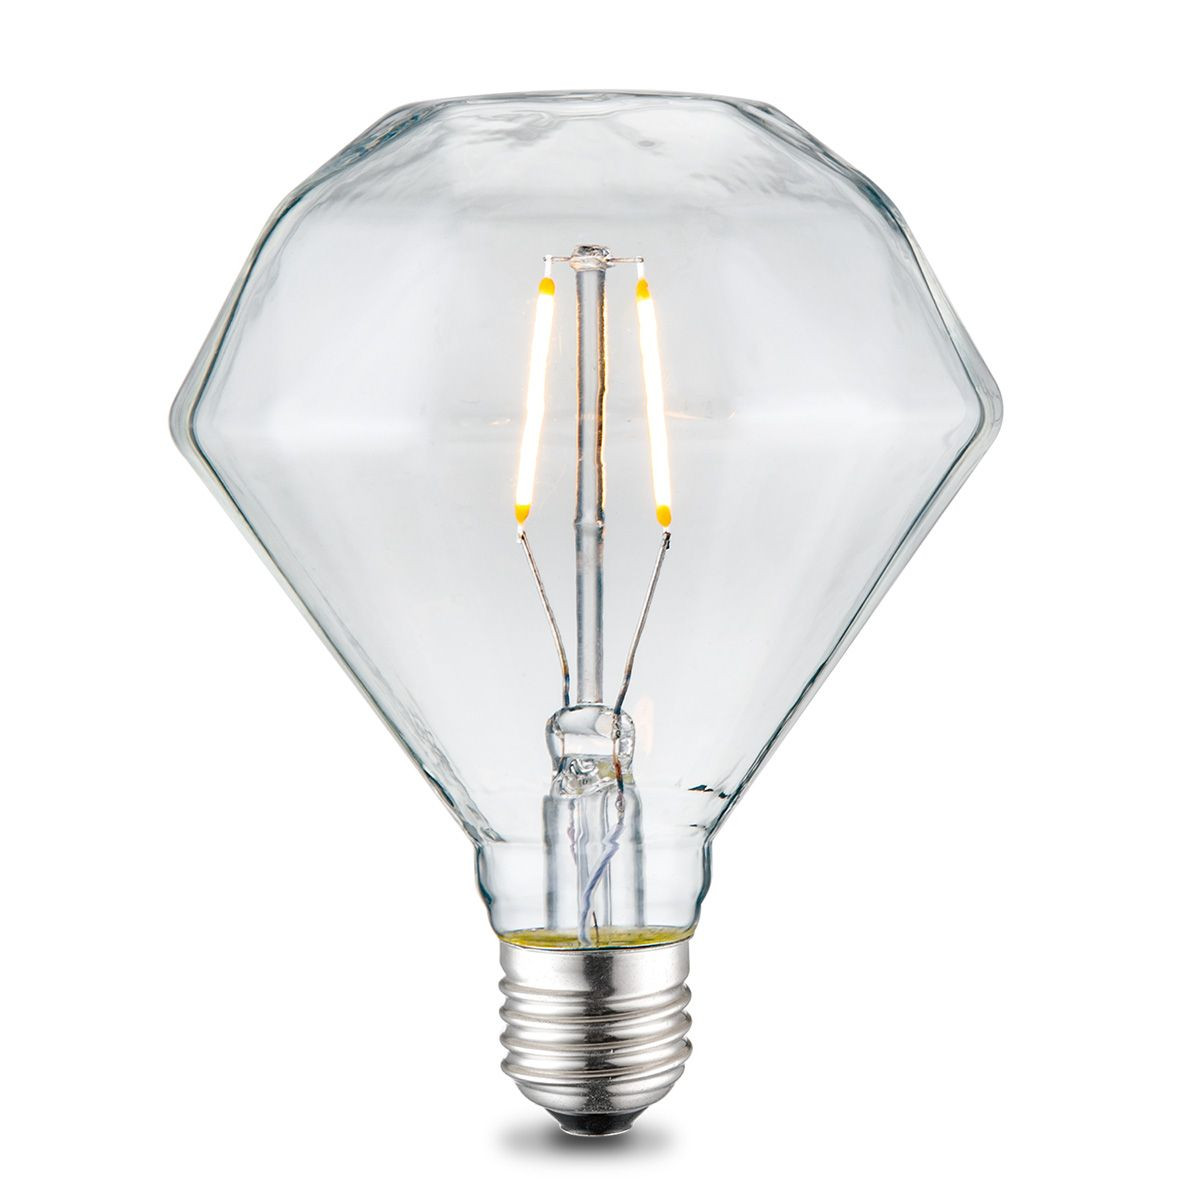 Edison Vintage LED lamp E27 LED filament lichtbron, Diamond D95, 11.2/11.2/13.8cm, Helder, Retro LED lamp 2W 160lm 2700K, warm wit licht, geschikt voor E27 fitting